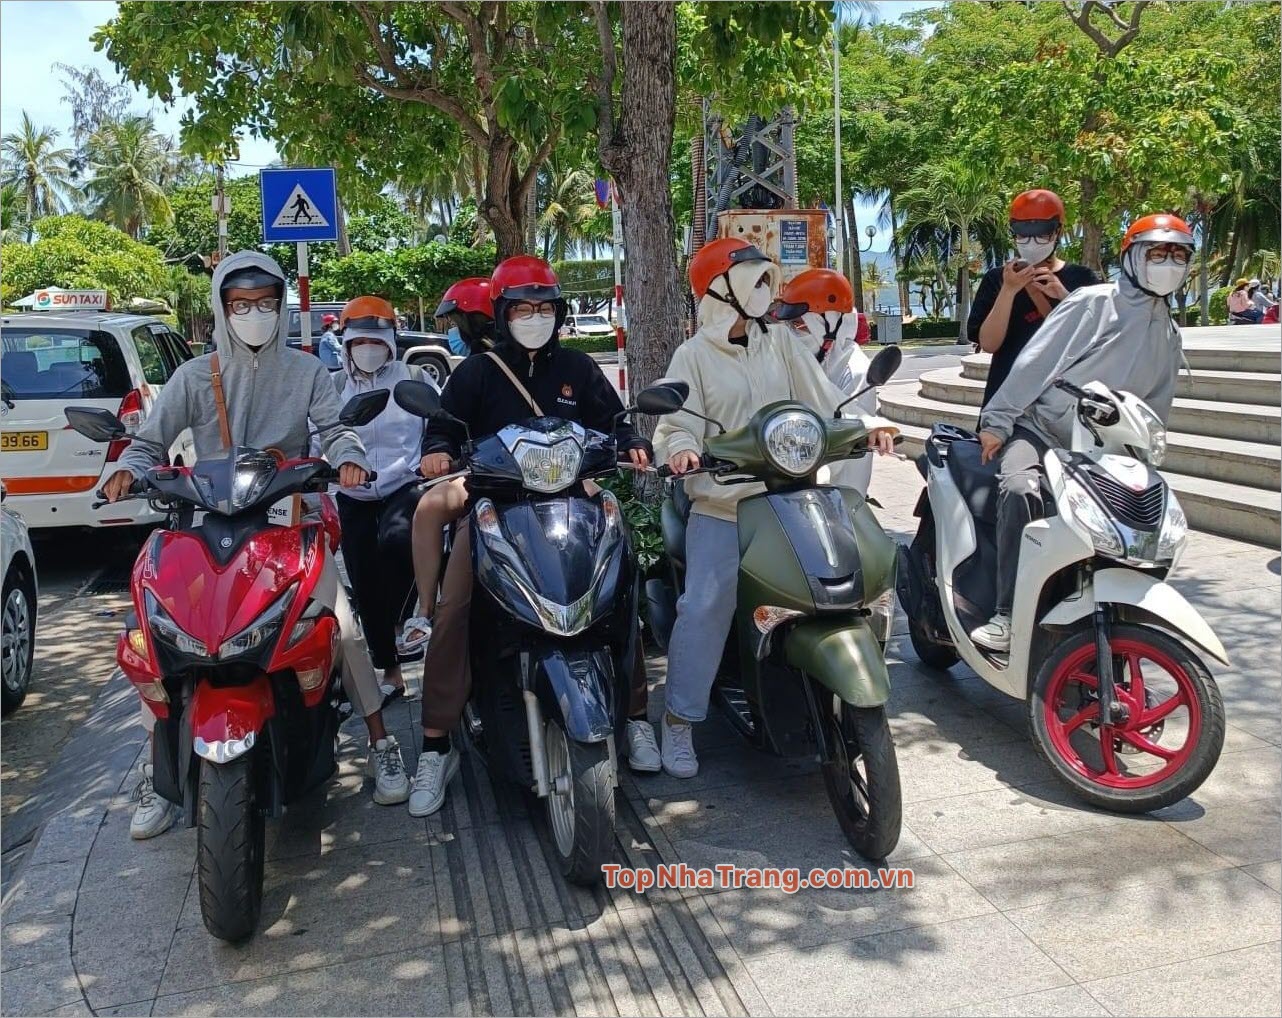 Thuê xe máy Nha Trang – Rent & Tour